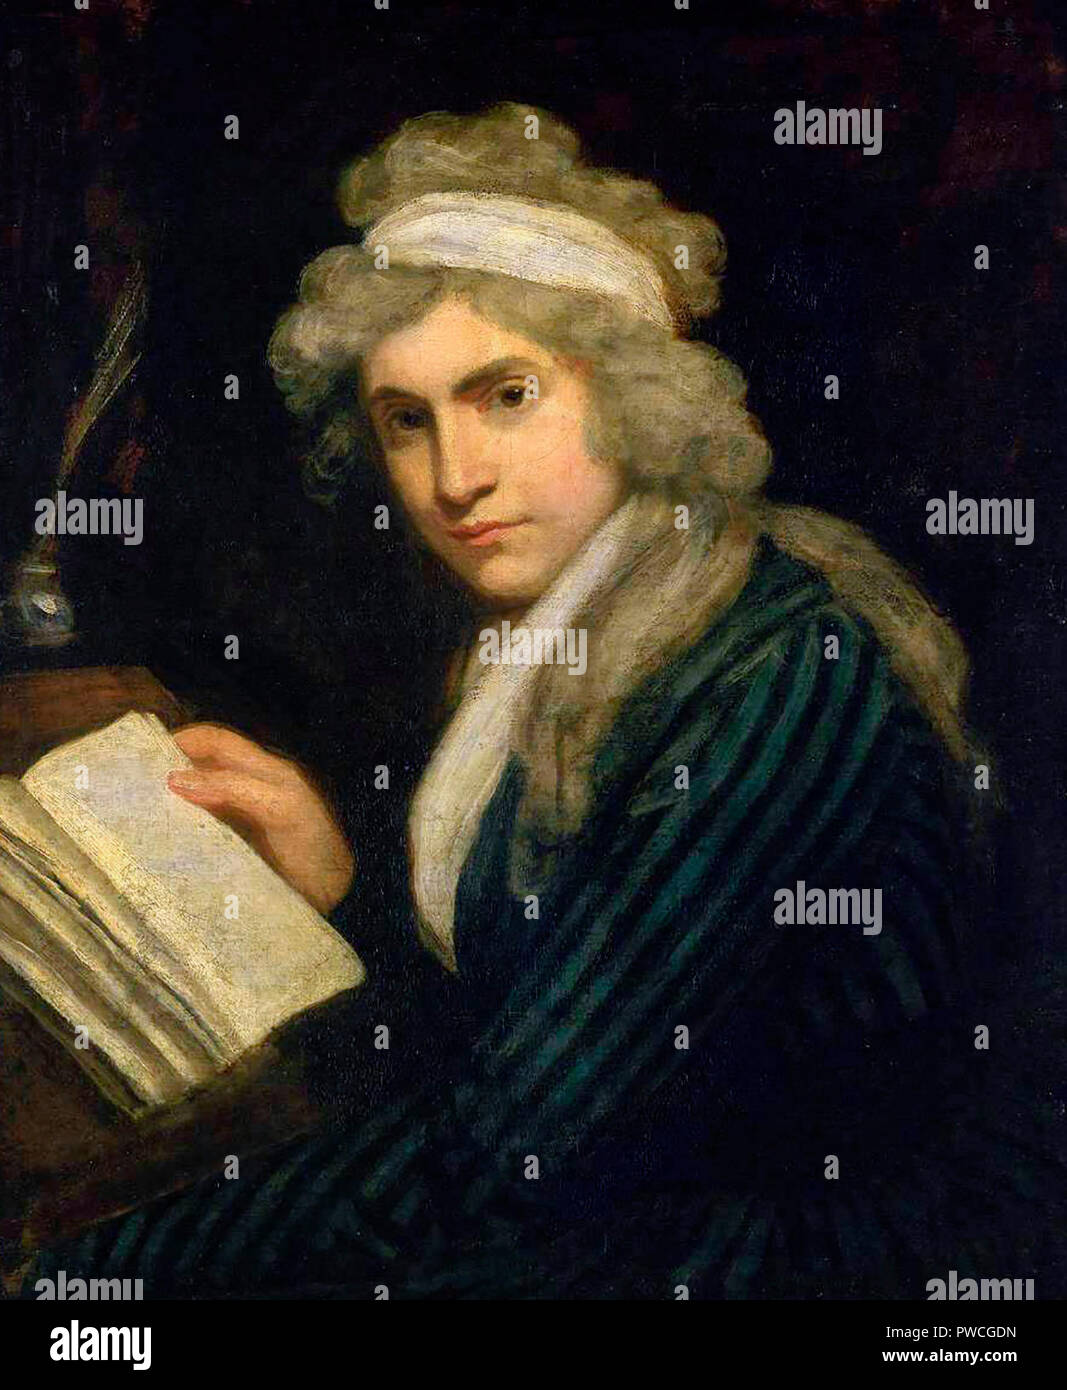 Portrait de Mary Wollstonecraft - John Opie, vers 1790 Banque D'Images